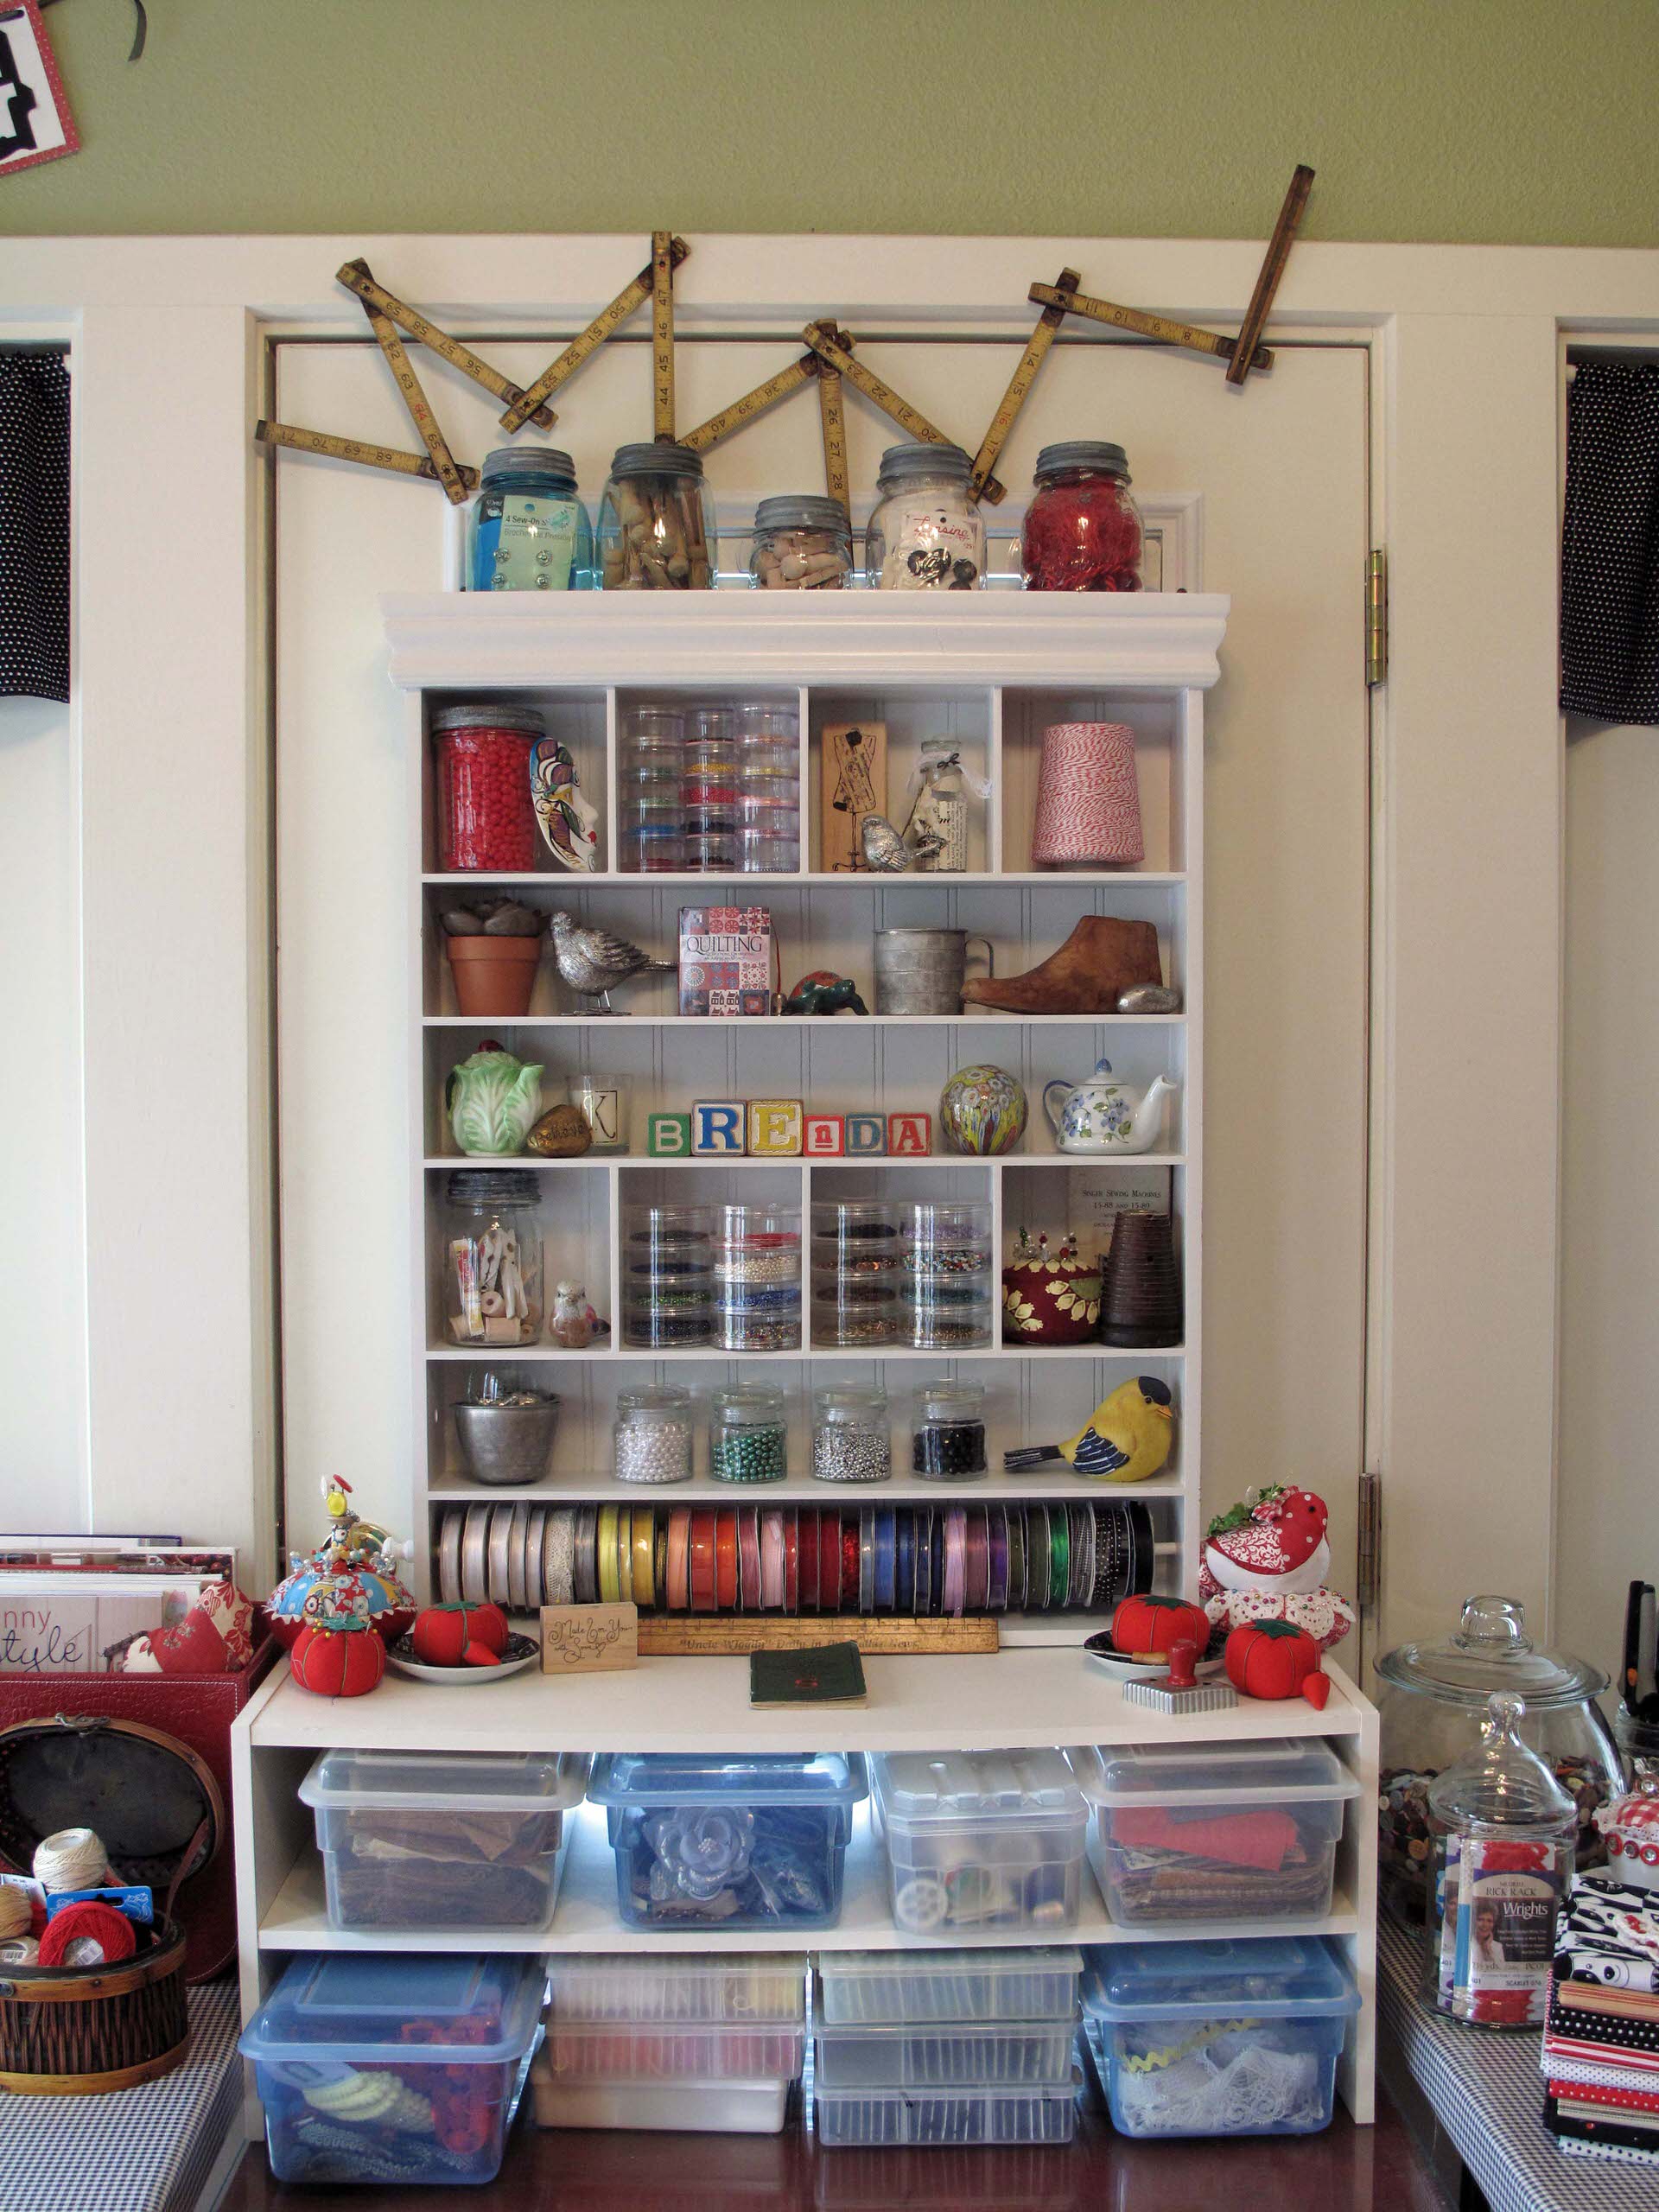 Sewing Room Organization  Sewing Room Storage Ideas